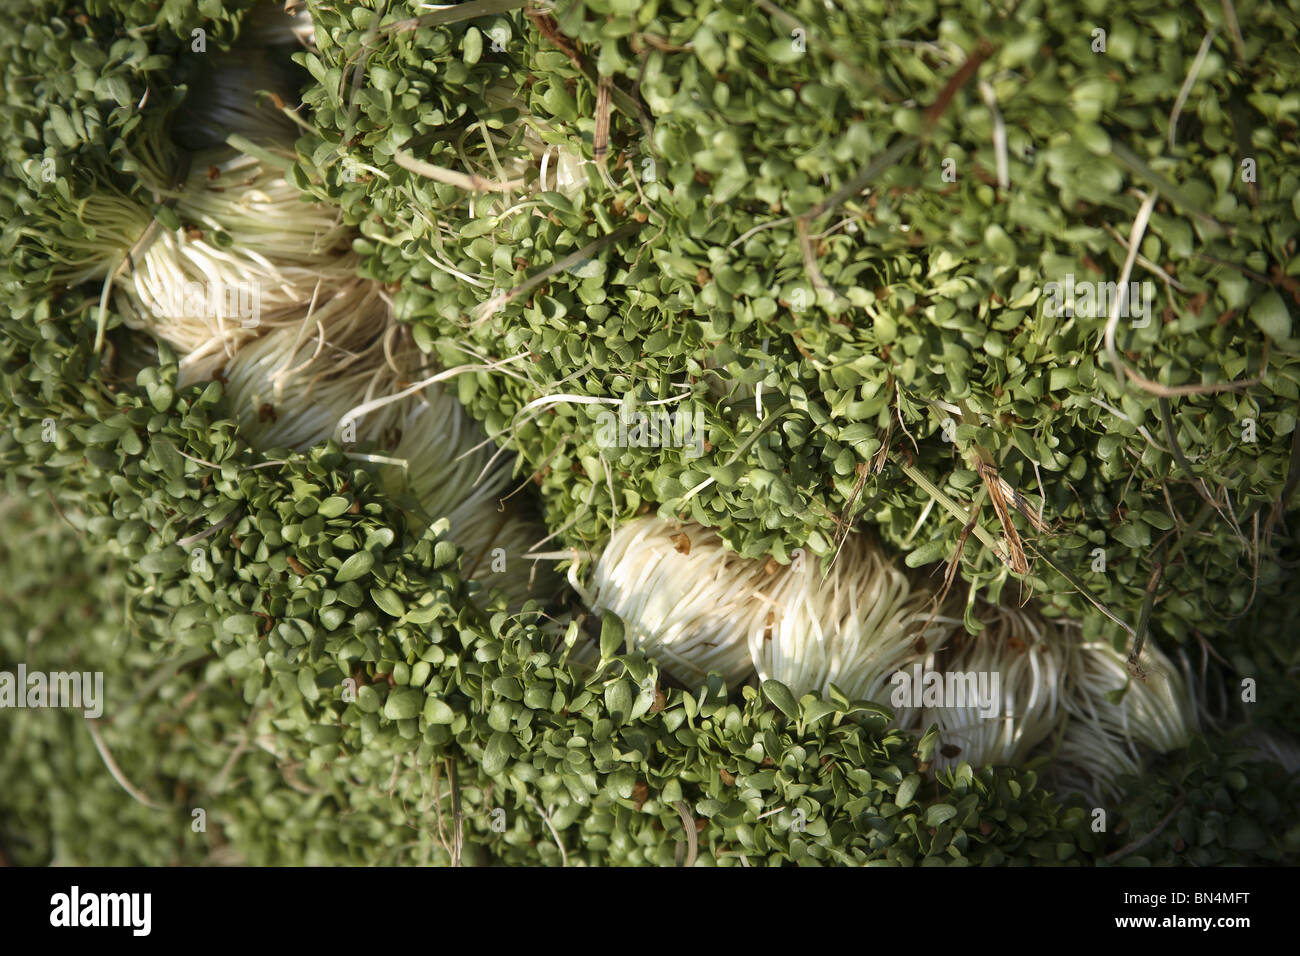 Vegetable ; Methi ; English Name Fenugreek ; Botanical name  Trigonella faoenum-graecun L ; Family  Fabaceae ; India Stock Photo